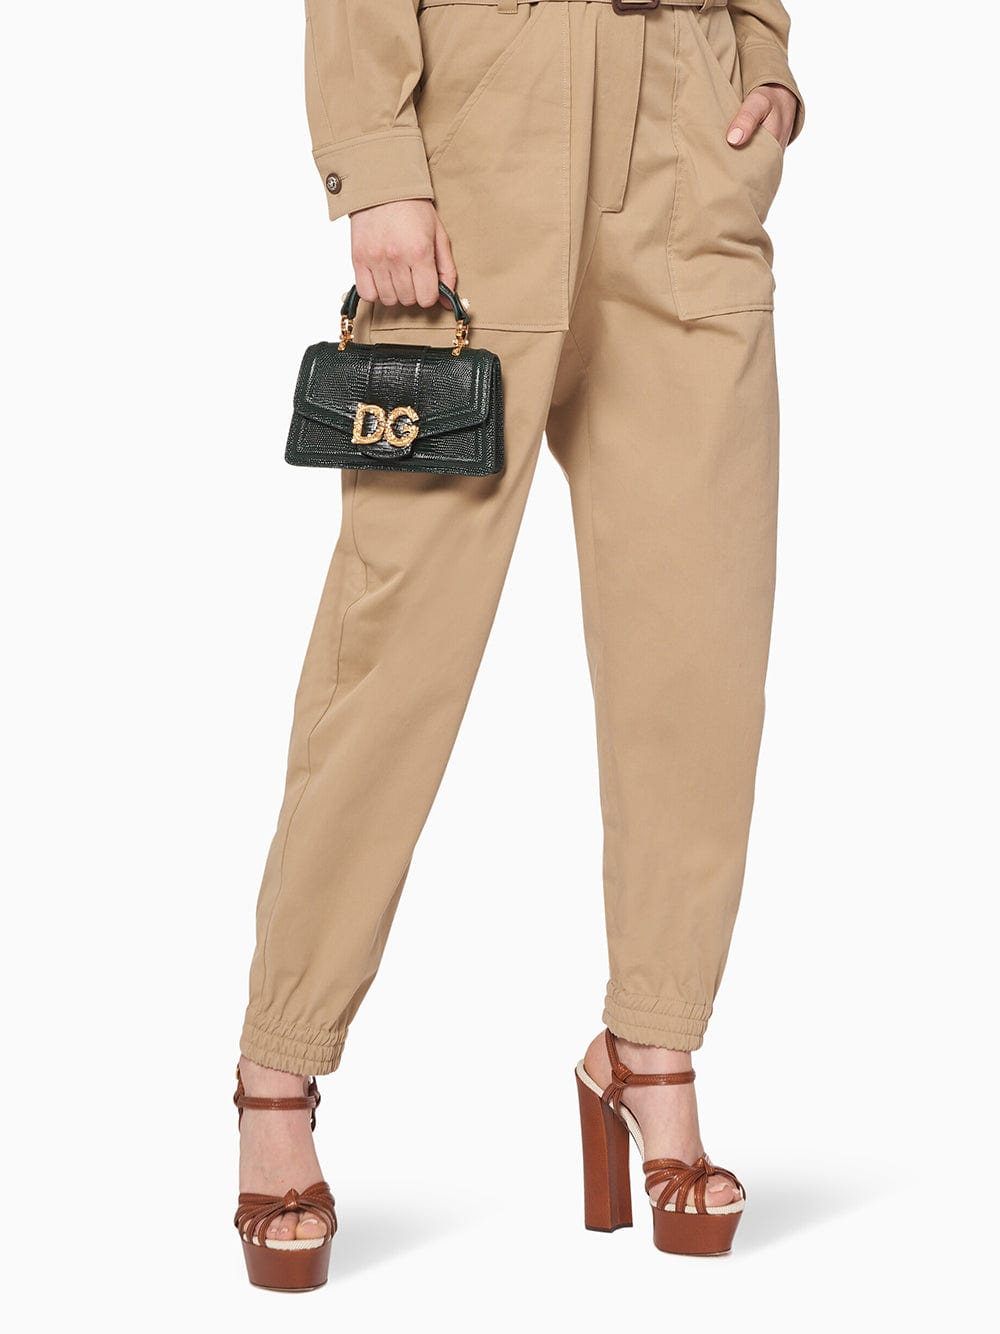 Dolce & Gabbana DG Amore Iguana Embossed Phone Bag